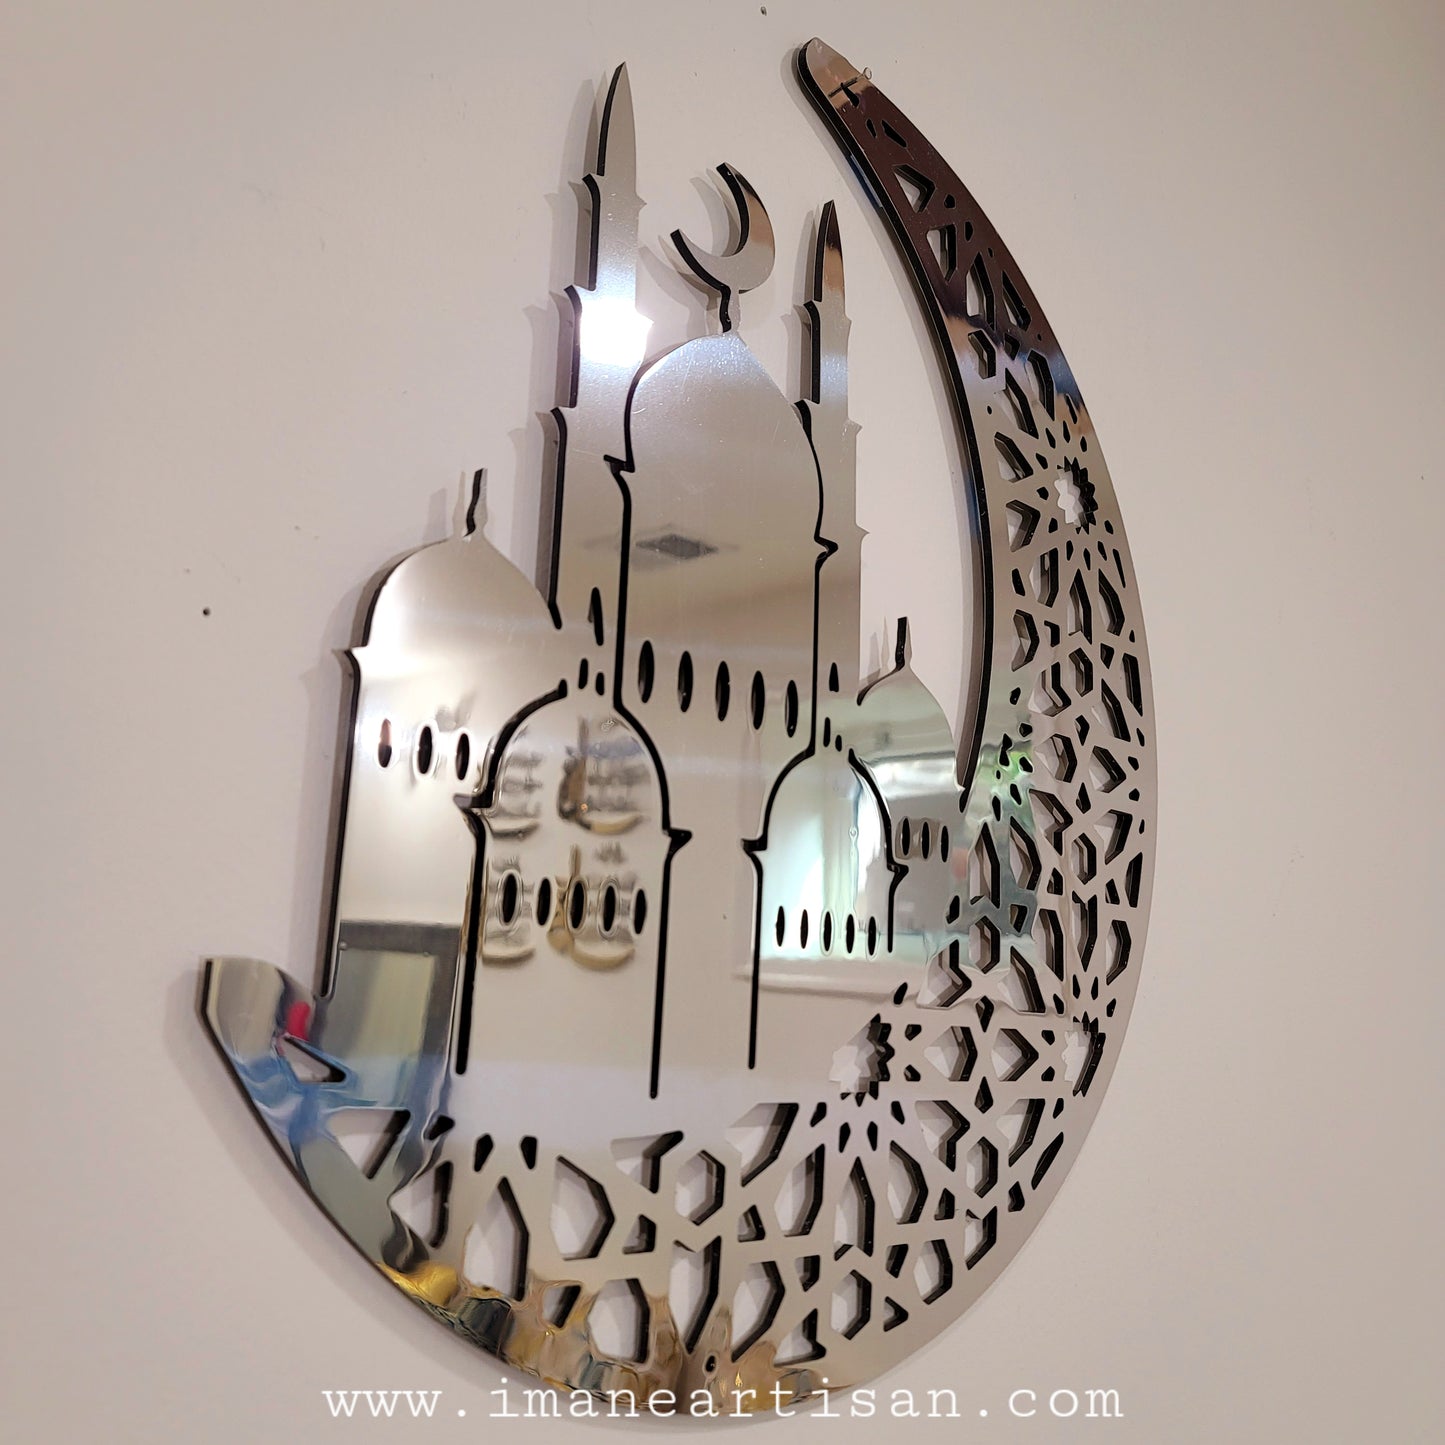 RD-007/ Ramadan decoration Moon masjid Islamic Arabic Calligraghy Arabesque Design/ Wall Art Decor Gold Silver Mirror Effect Alucobond Metal